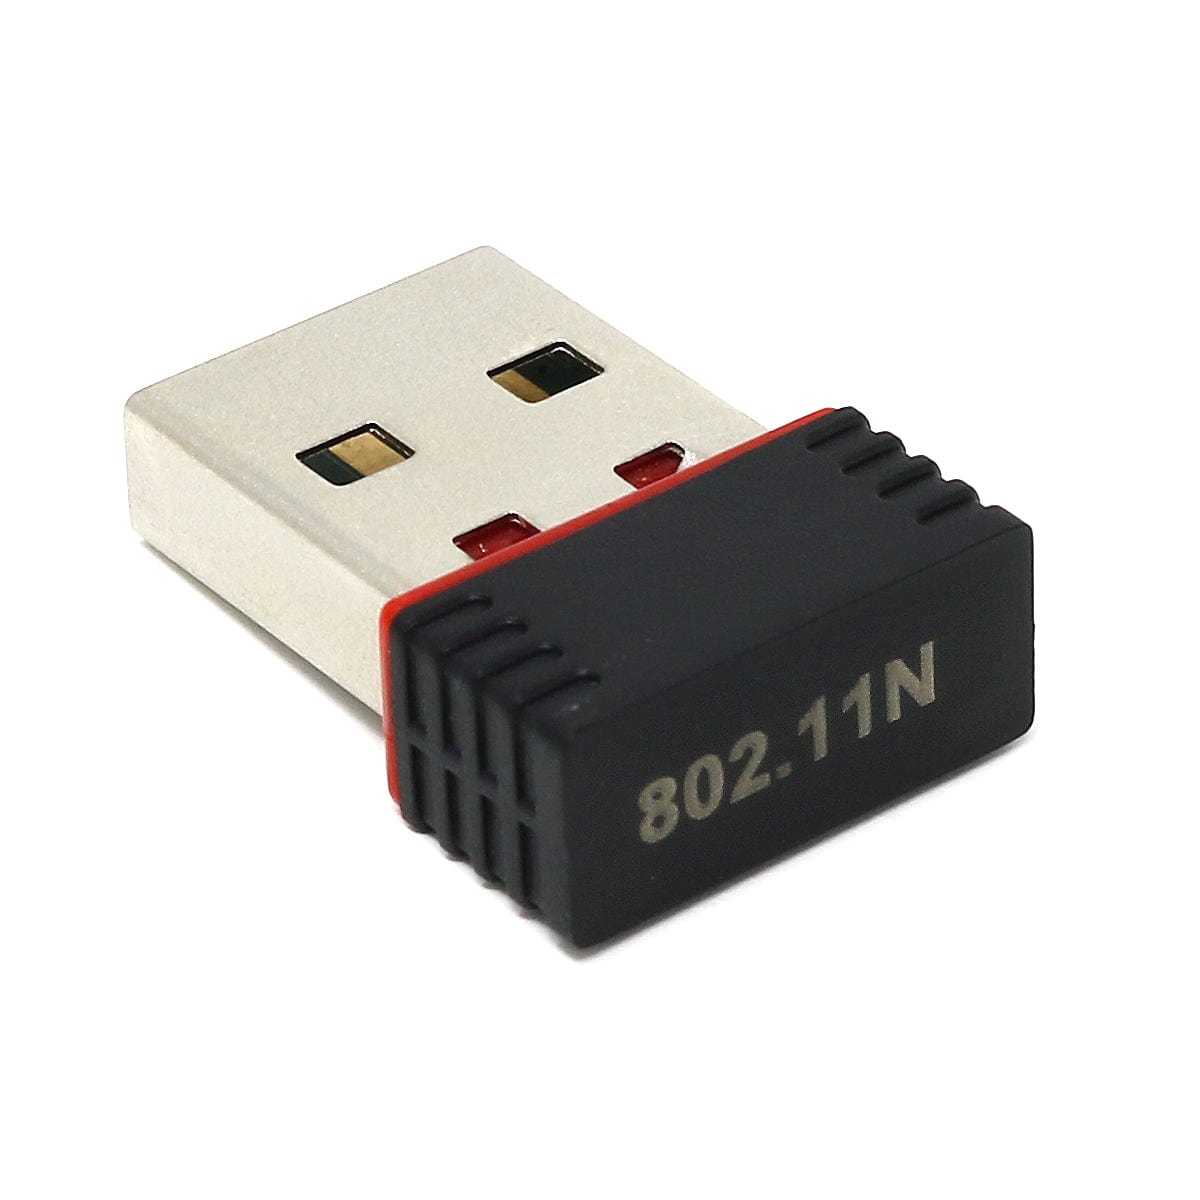 USB WiFi Adapter for Raspberry Pi - The Pi Hut